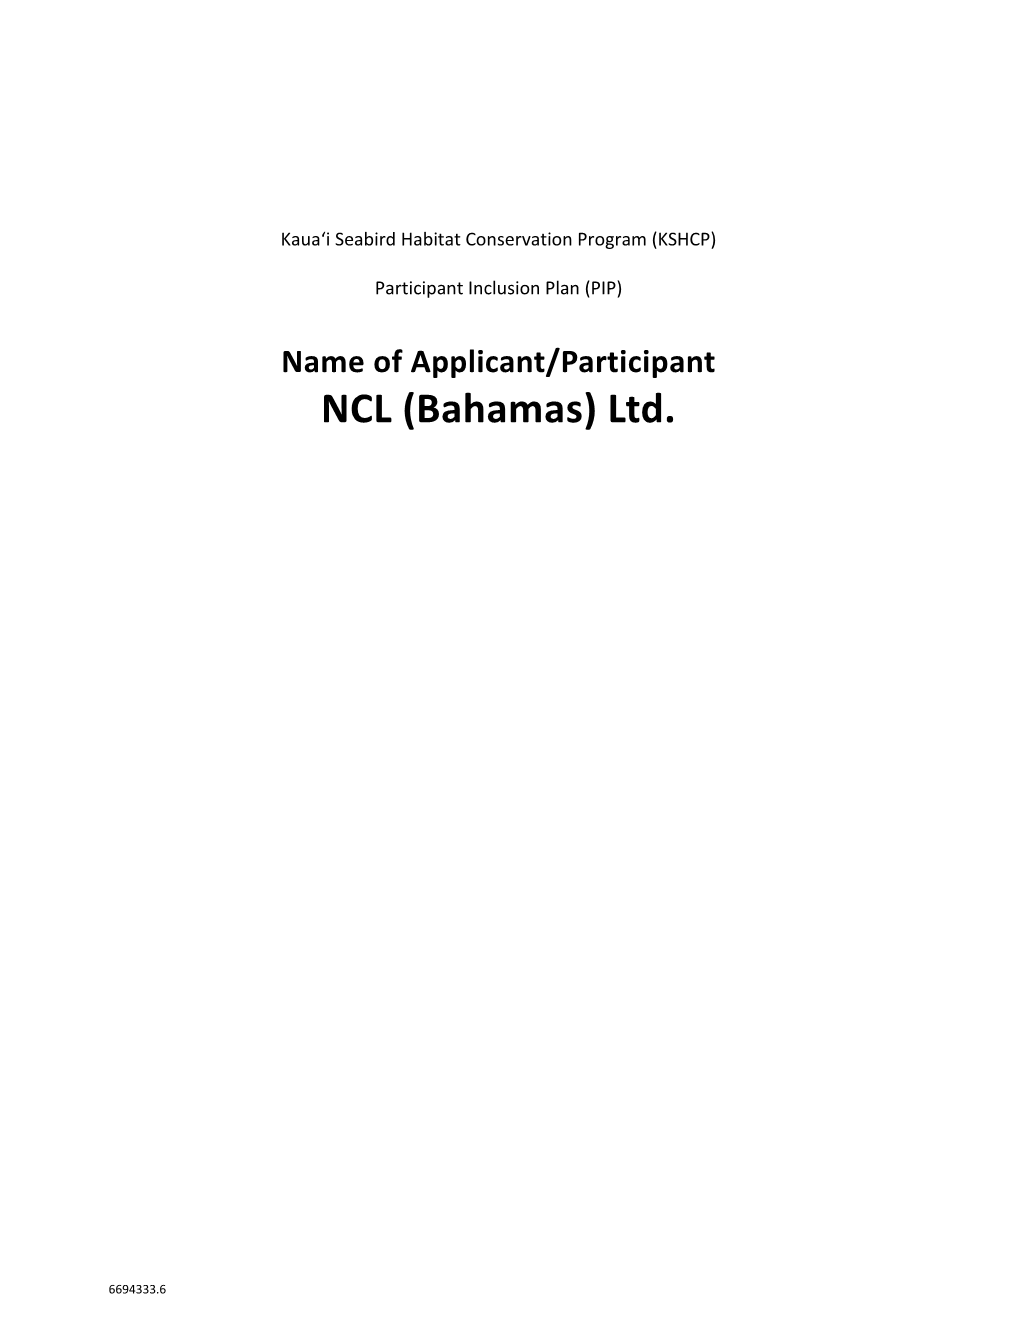 Name of Applicant/Participant NCL (Bahamas) Ltd